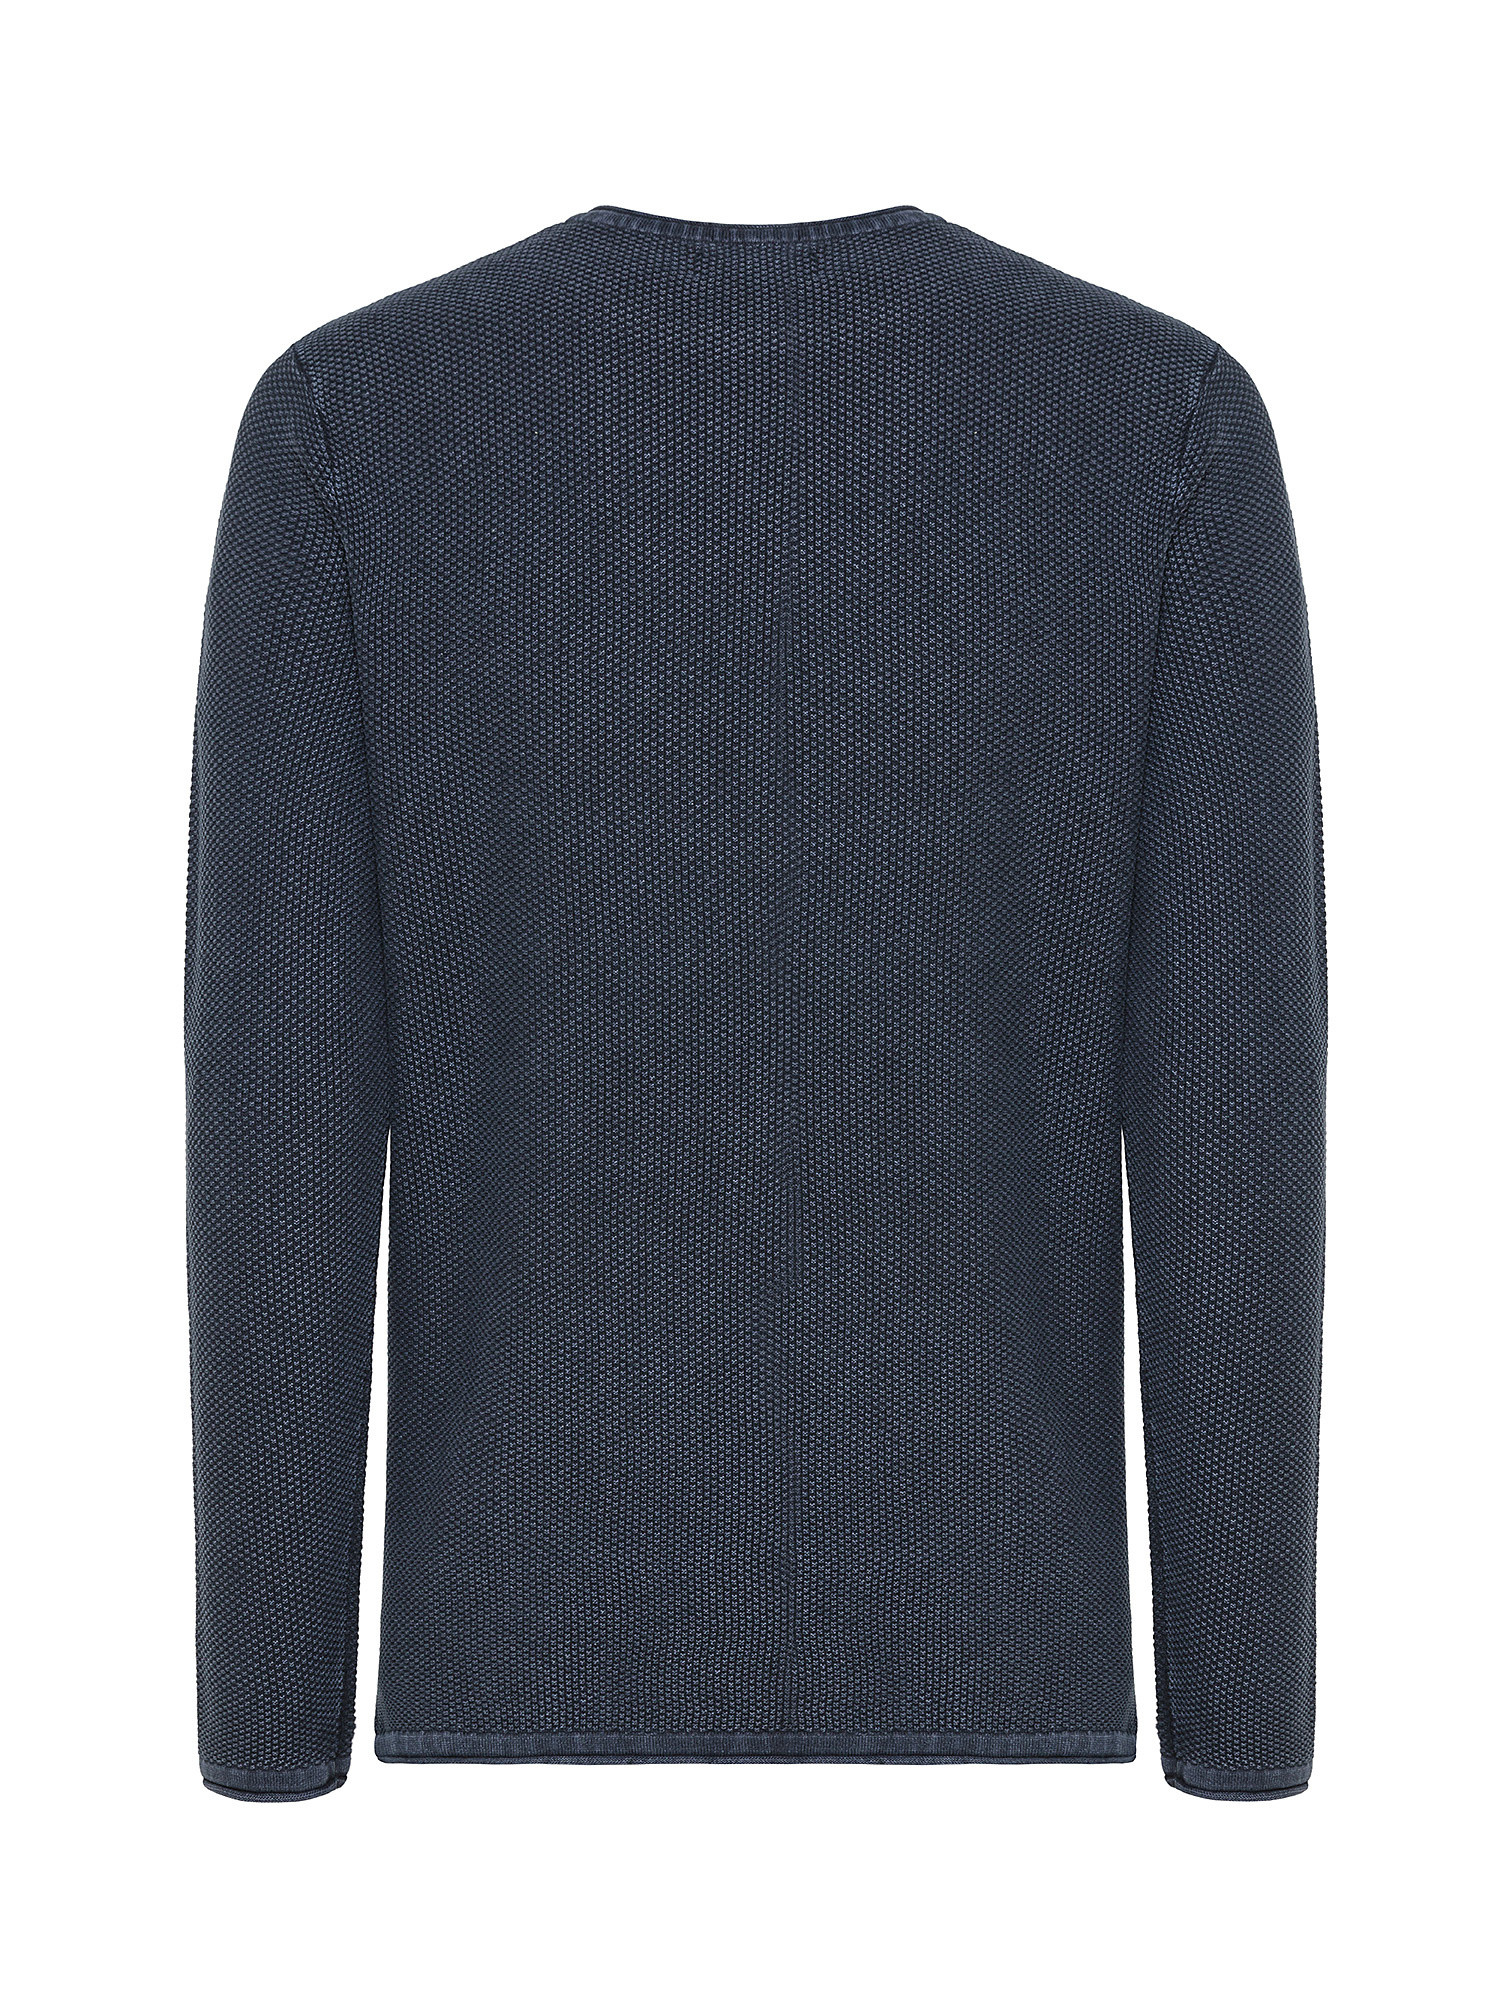 Jack & Jones - Pullover in cotone, Blu scuro, large image number 1